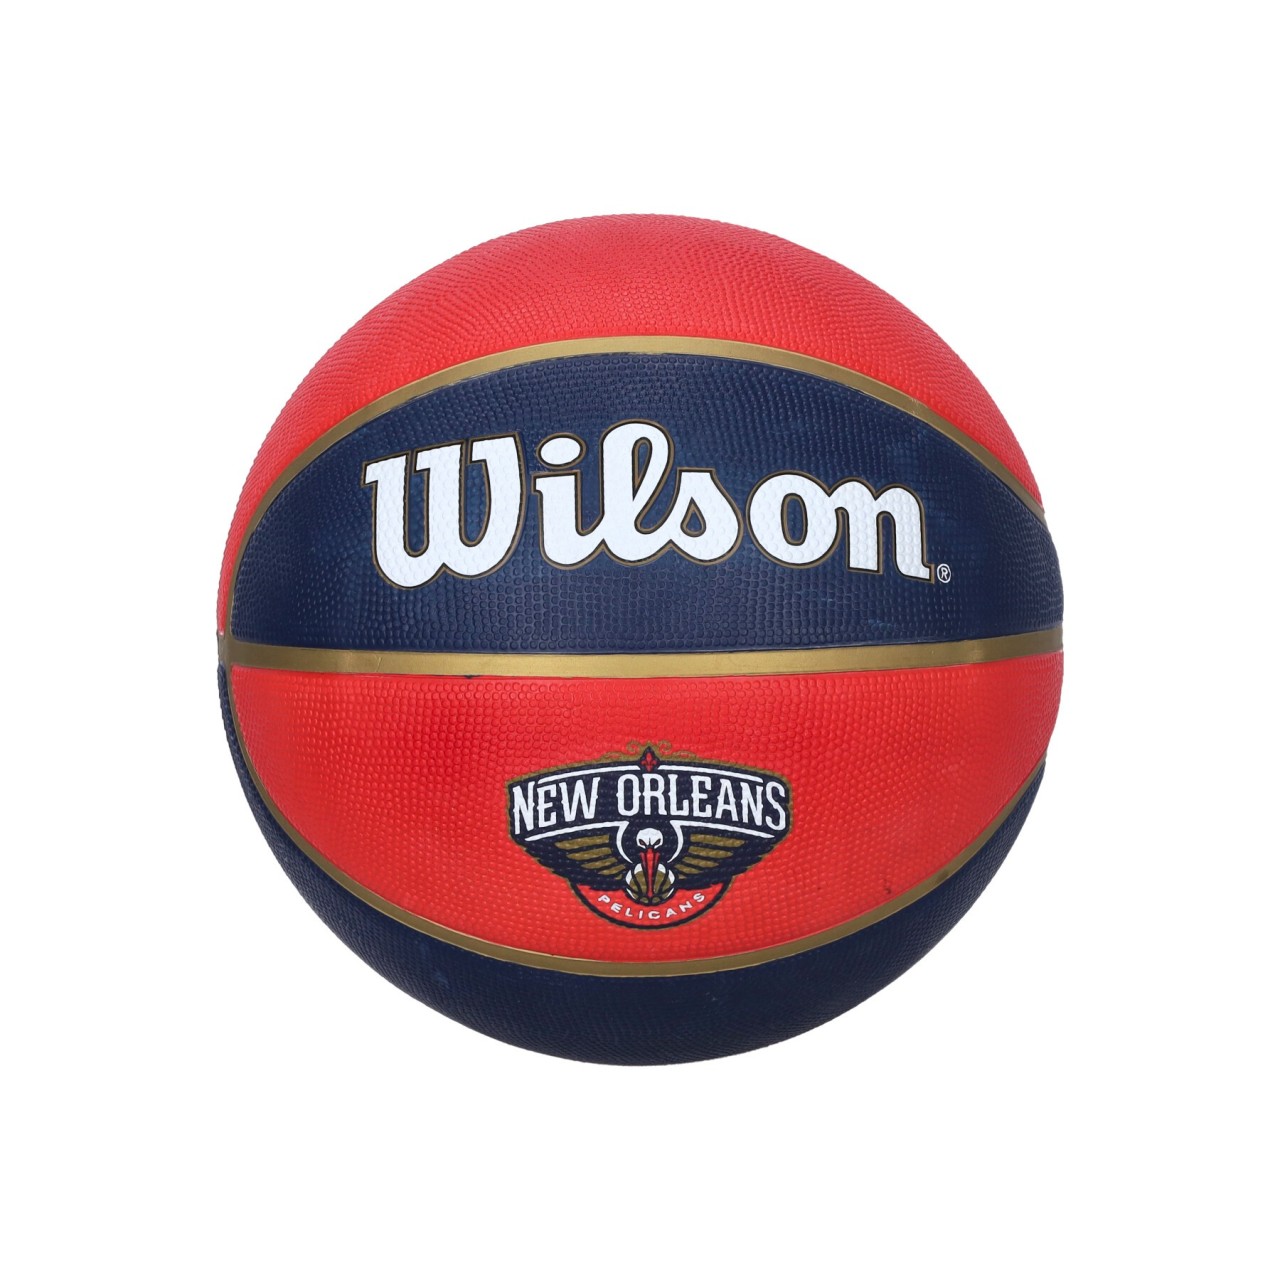 WILSON TEAM NBA TEAM TRIBUTE BASKETBALL SIZE 7 NEOPEL WTB1300XBNO